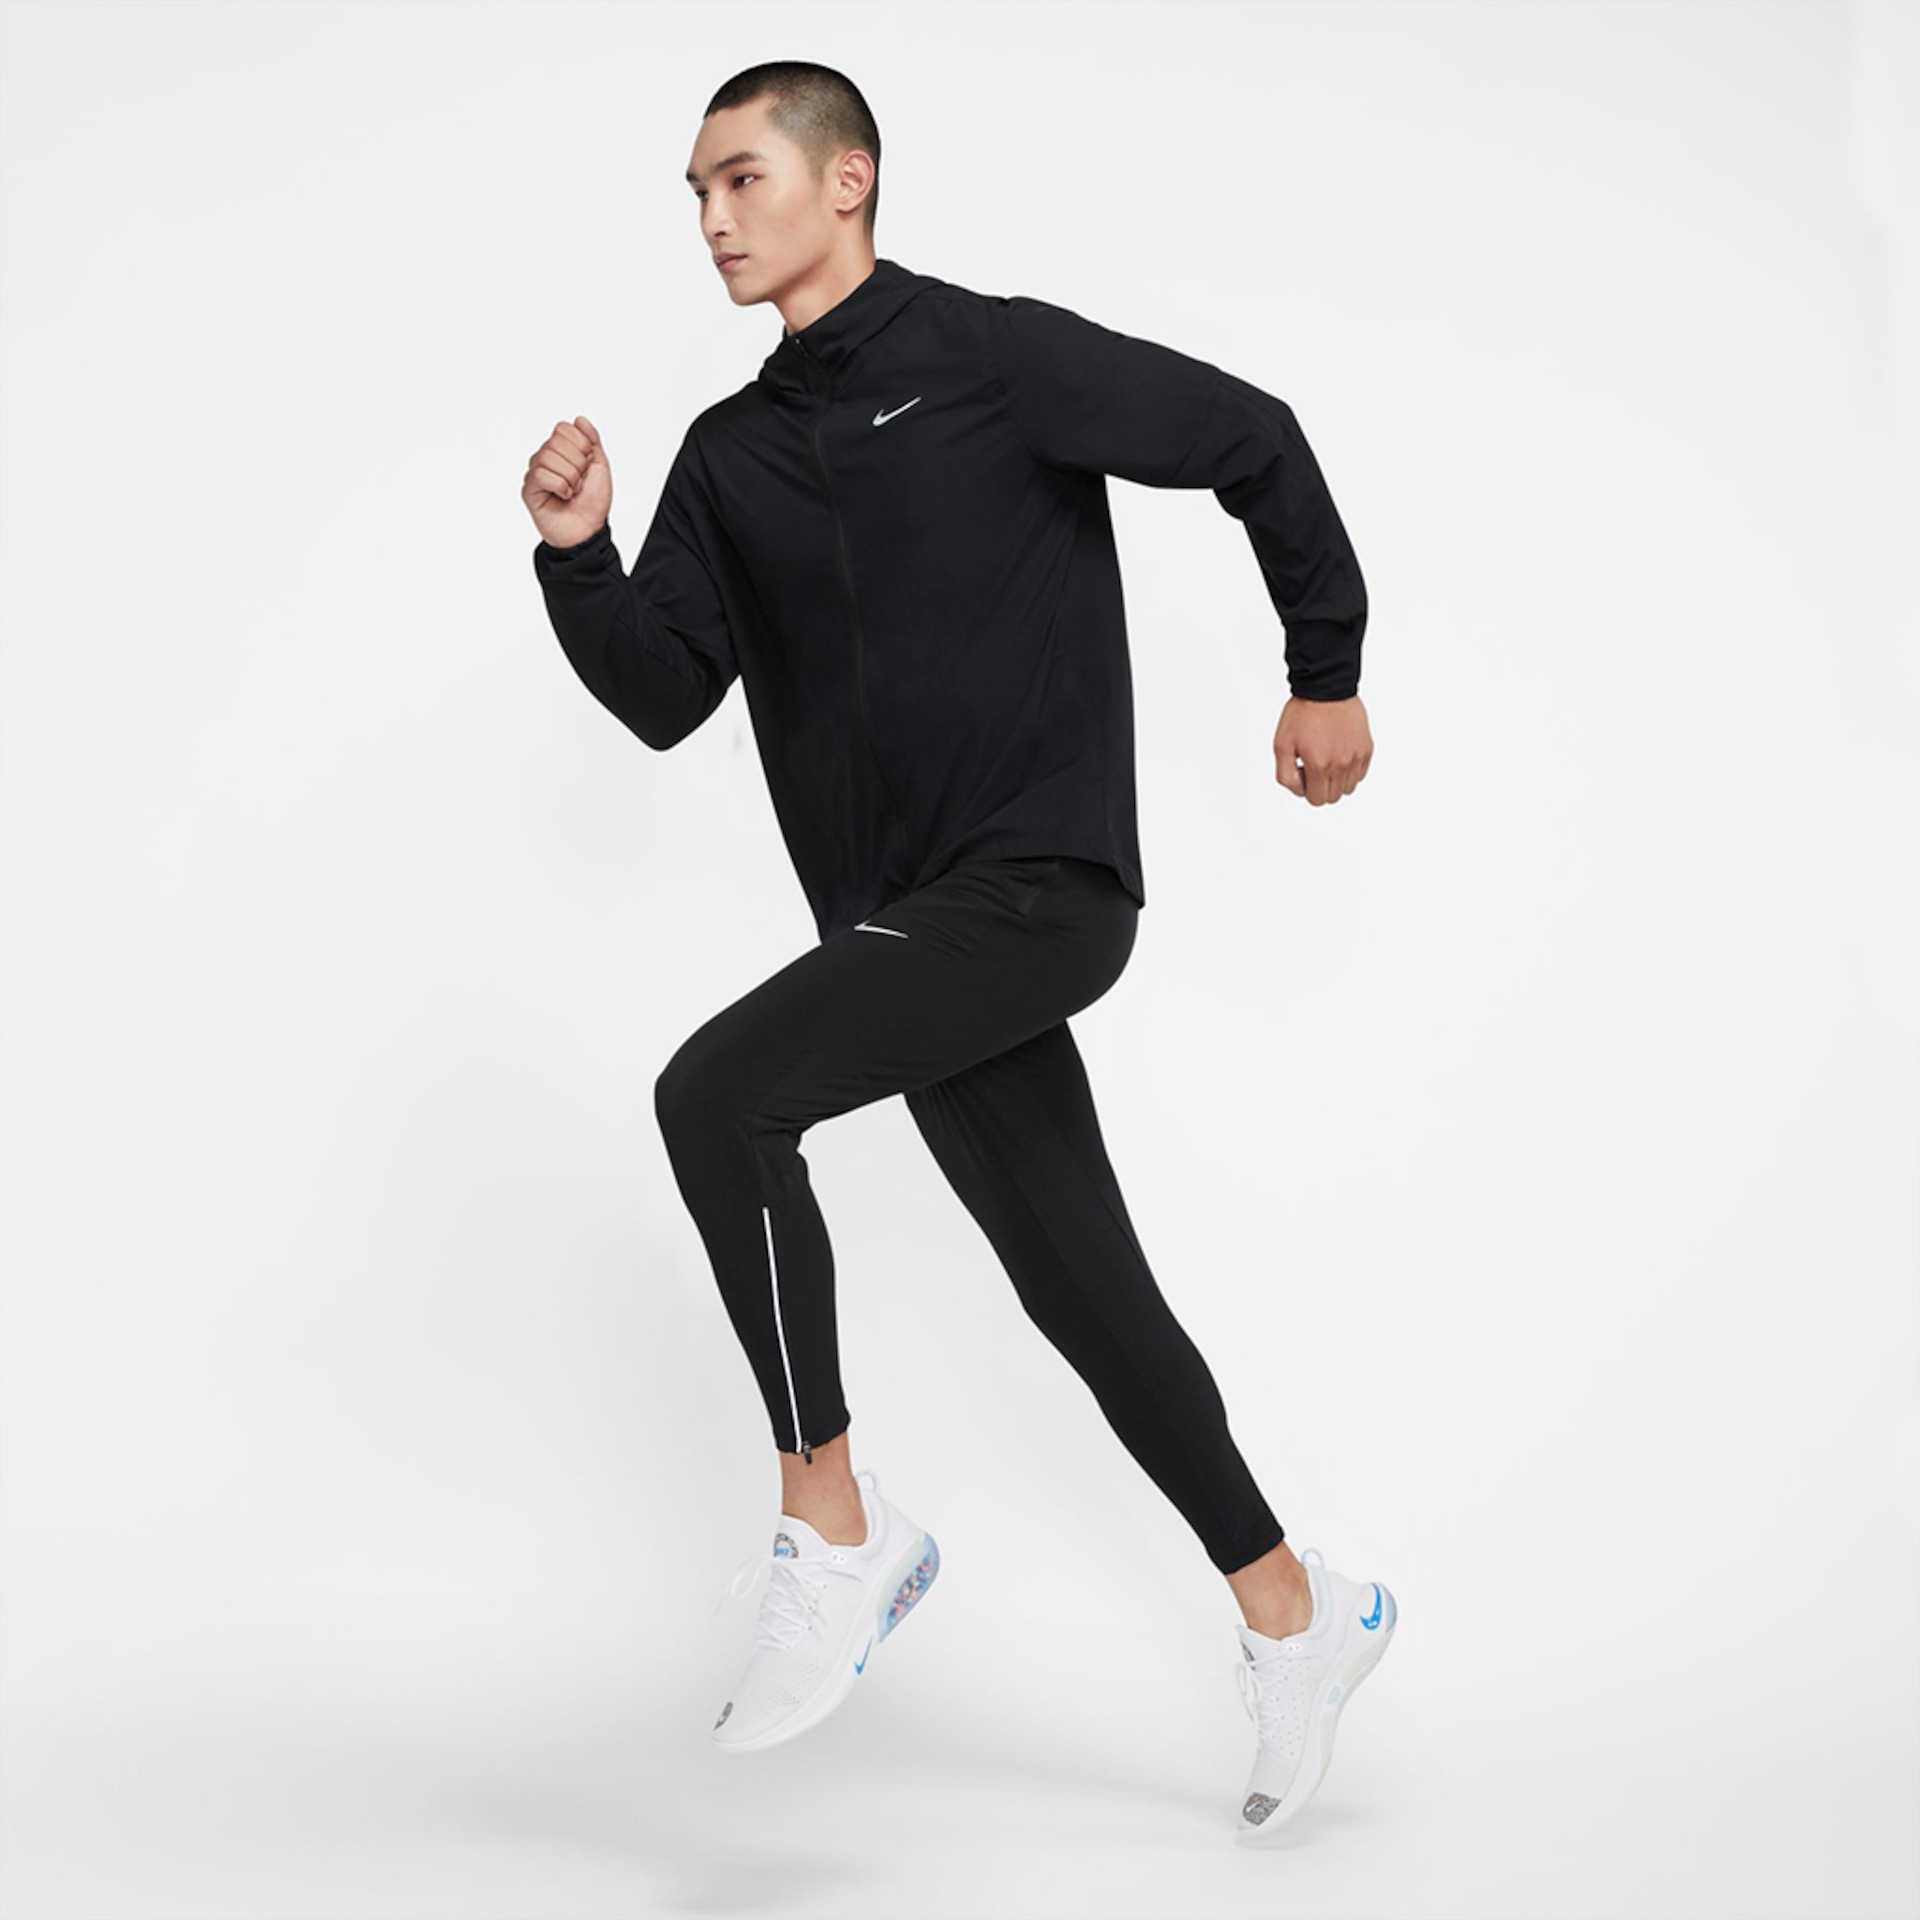 Jaqueta Nike Run Stripe Masculina - Foto 5